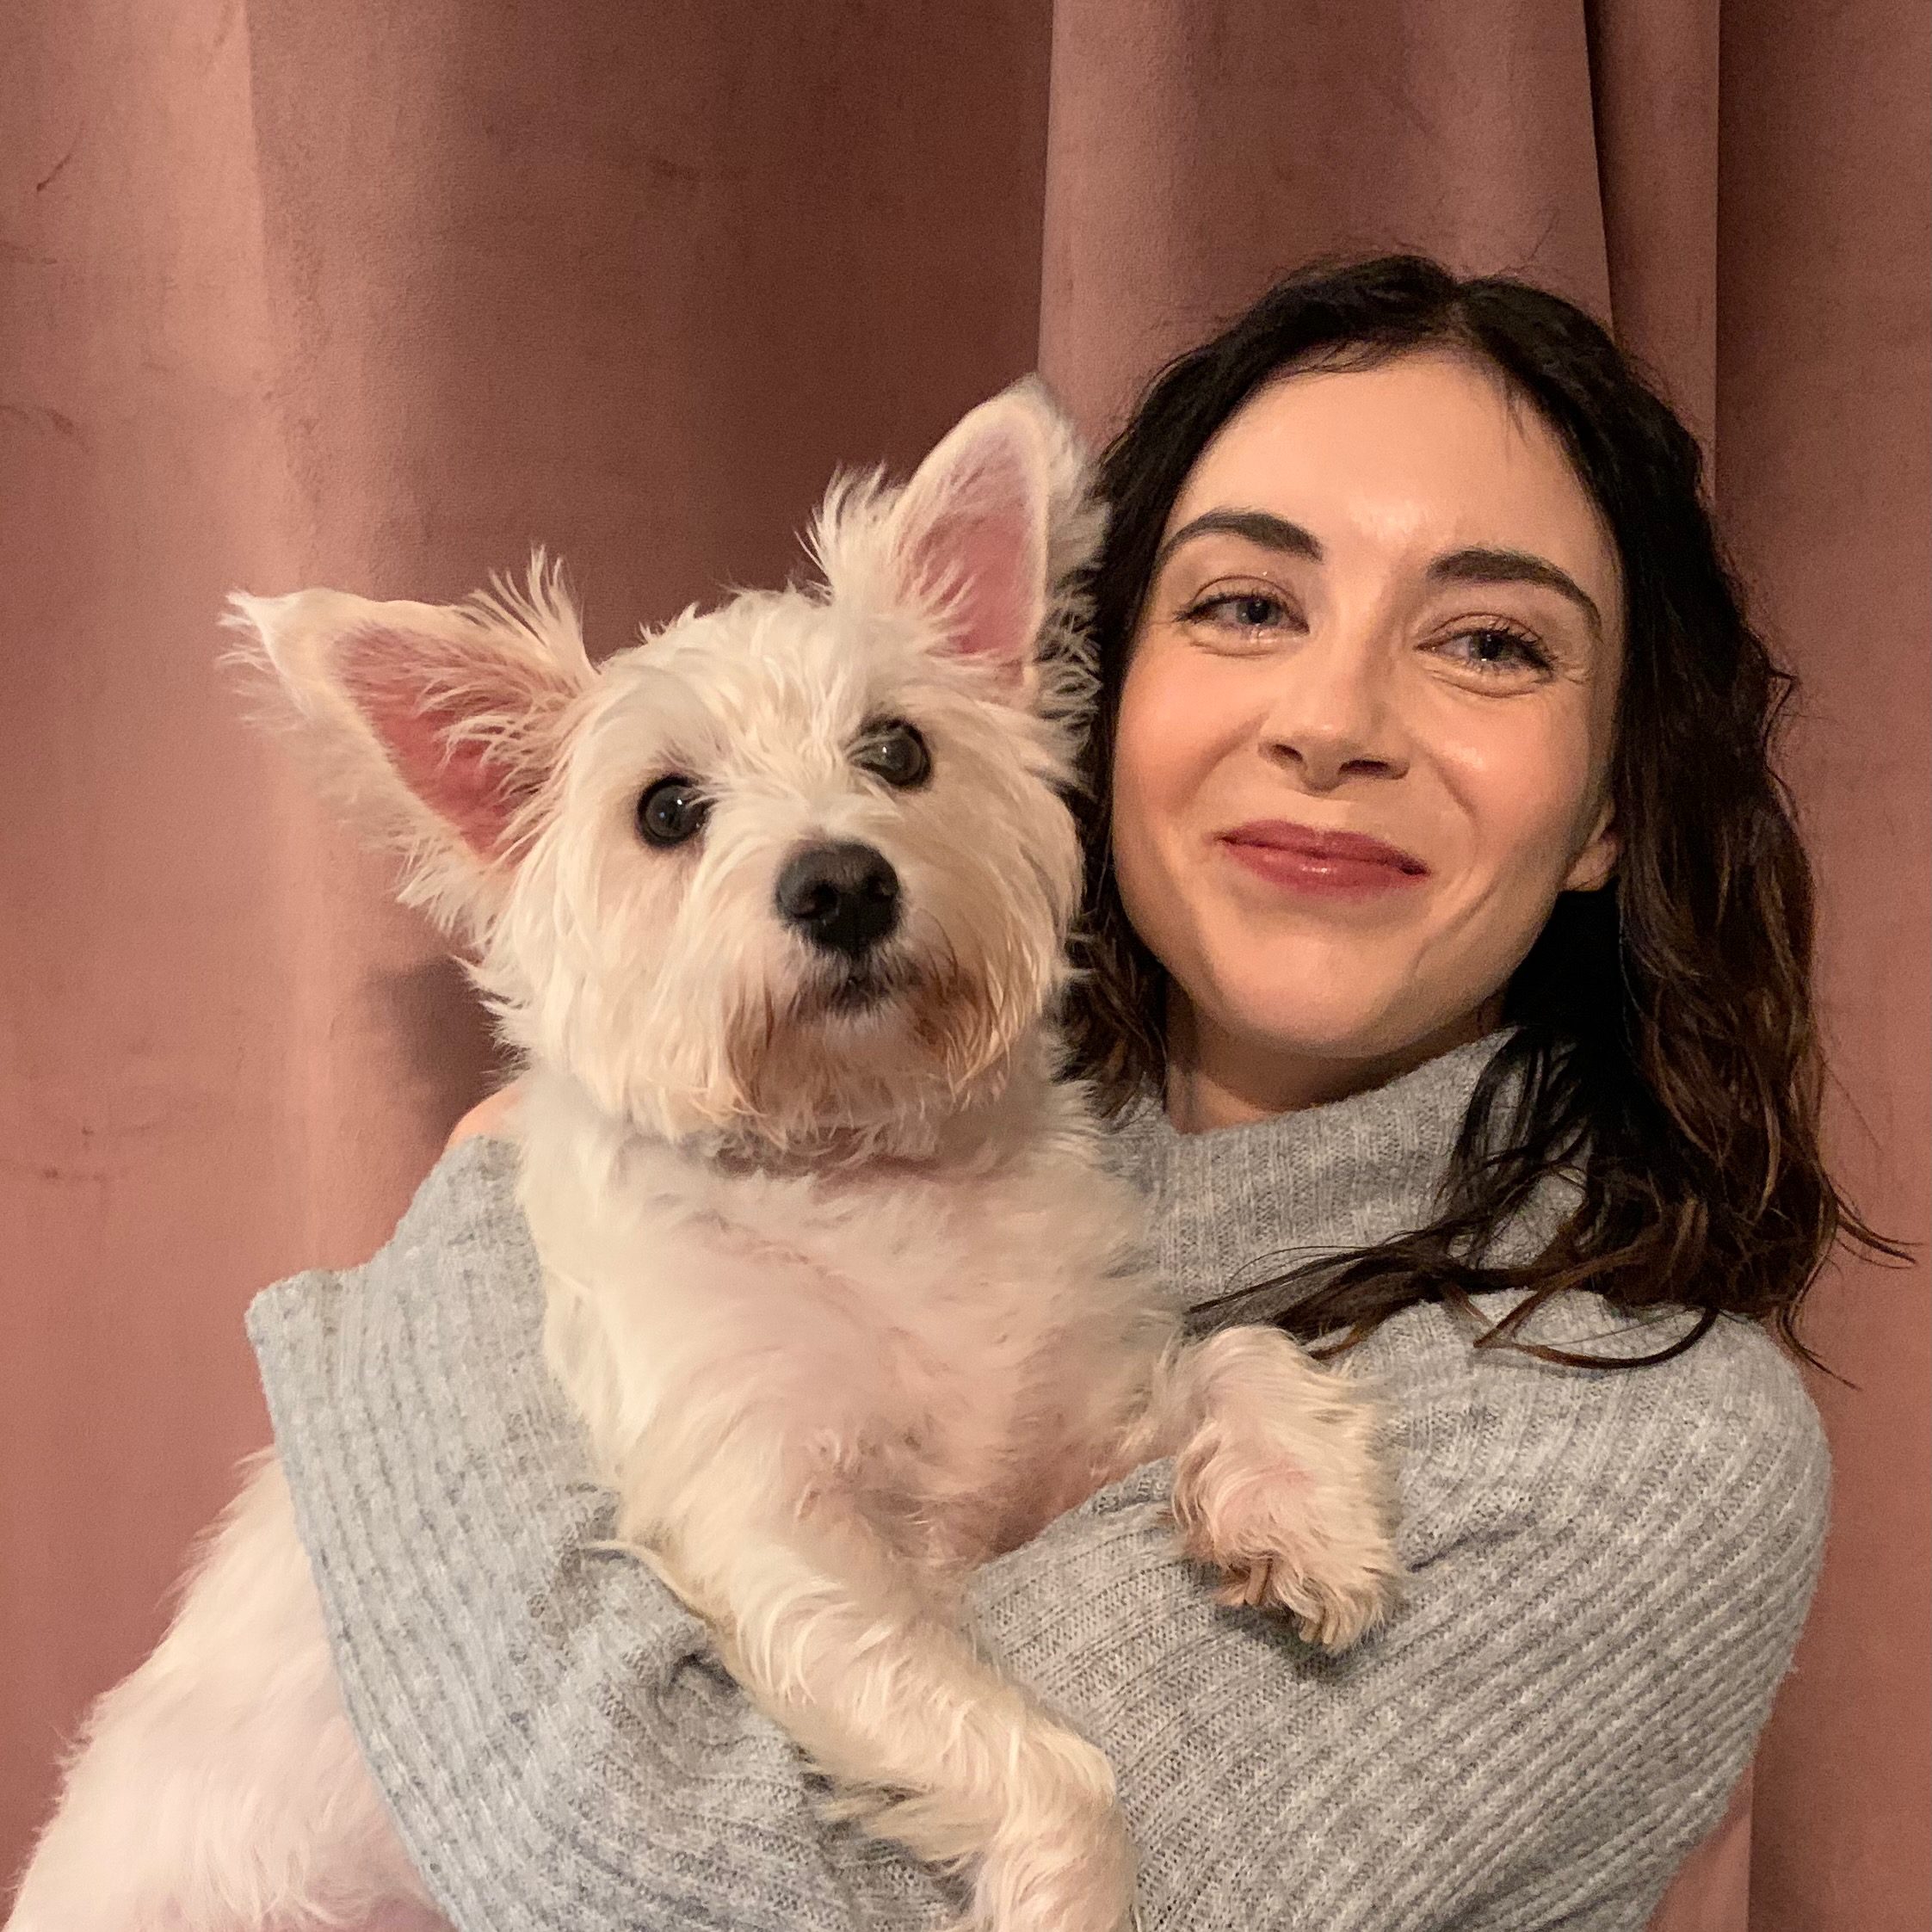 Kristina Adams and her dog, Millie, 2022